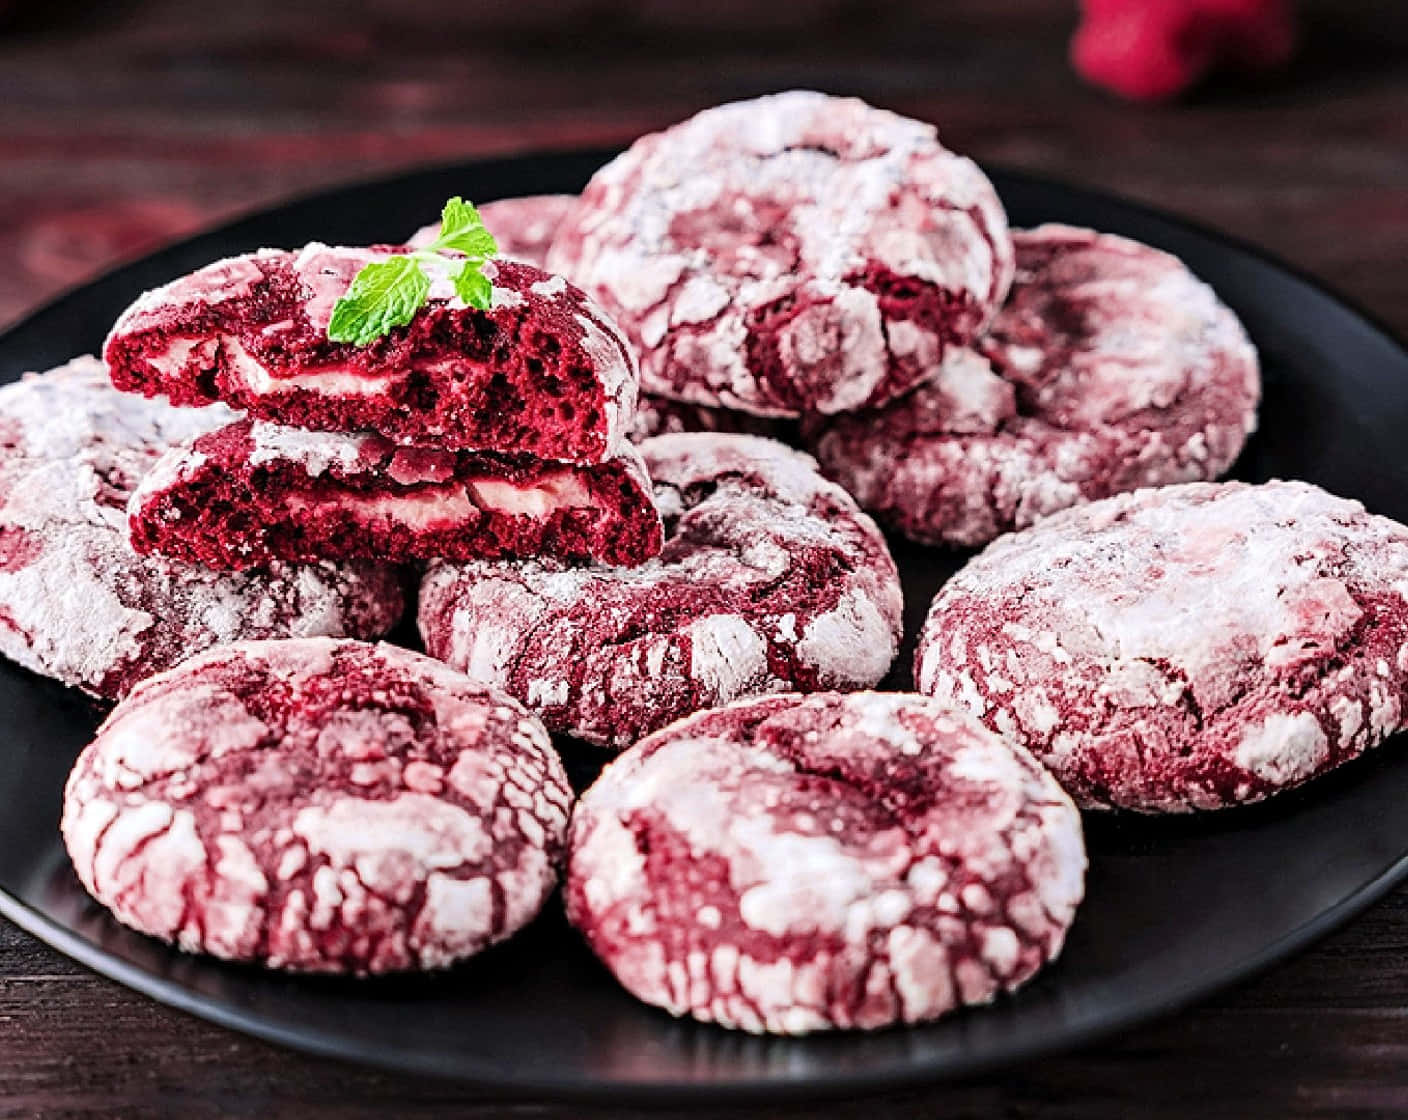 Raspberry Ruffled Cookies On A Plate